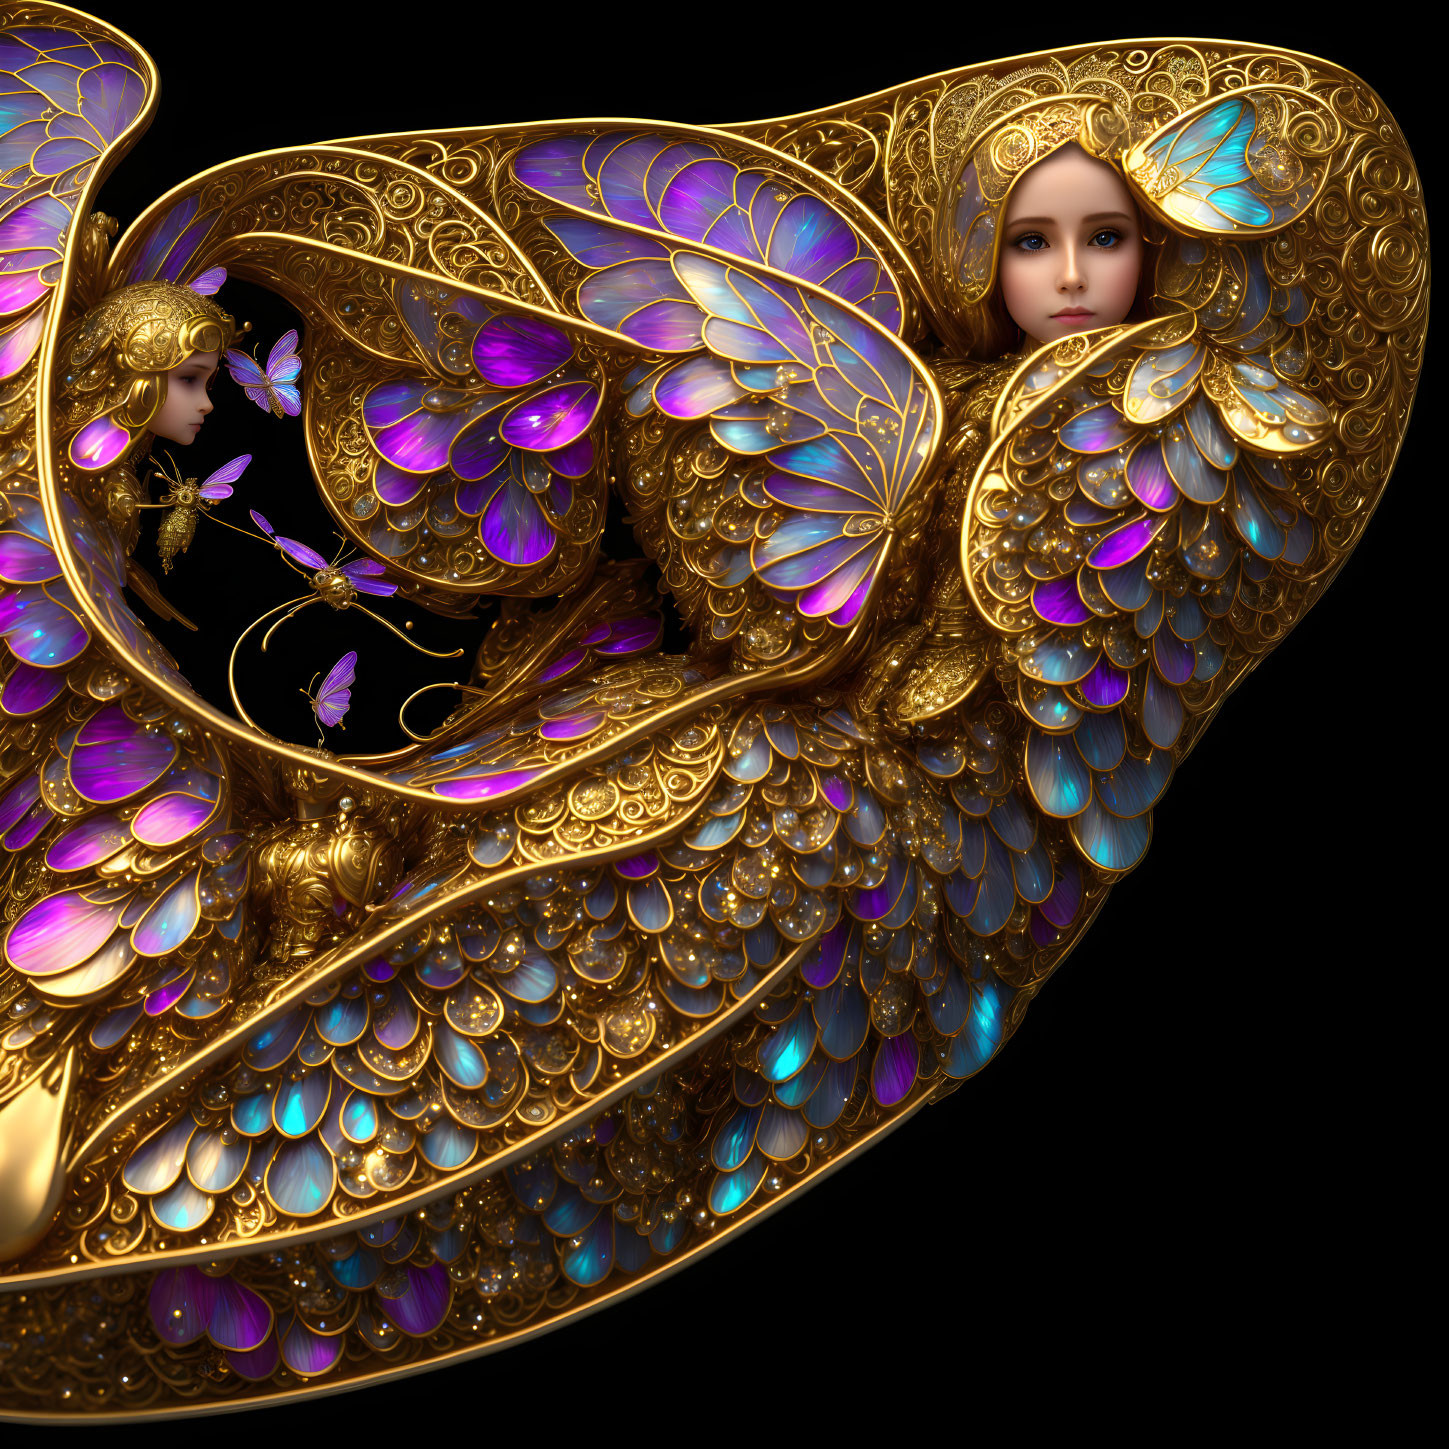 Digital art: Faces in golden filigree with butterfly motifs on black.